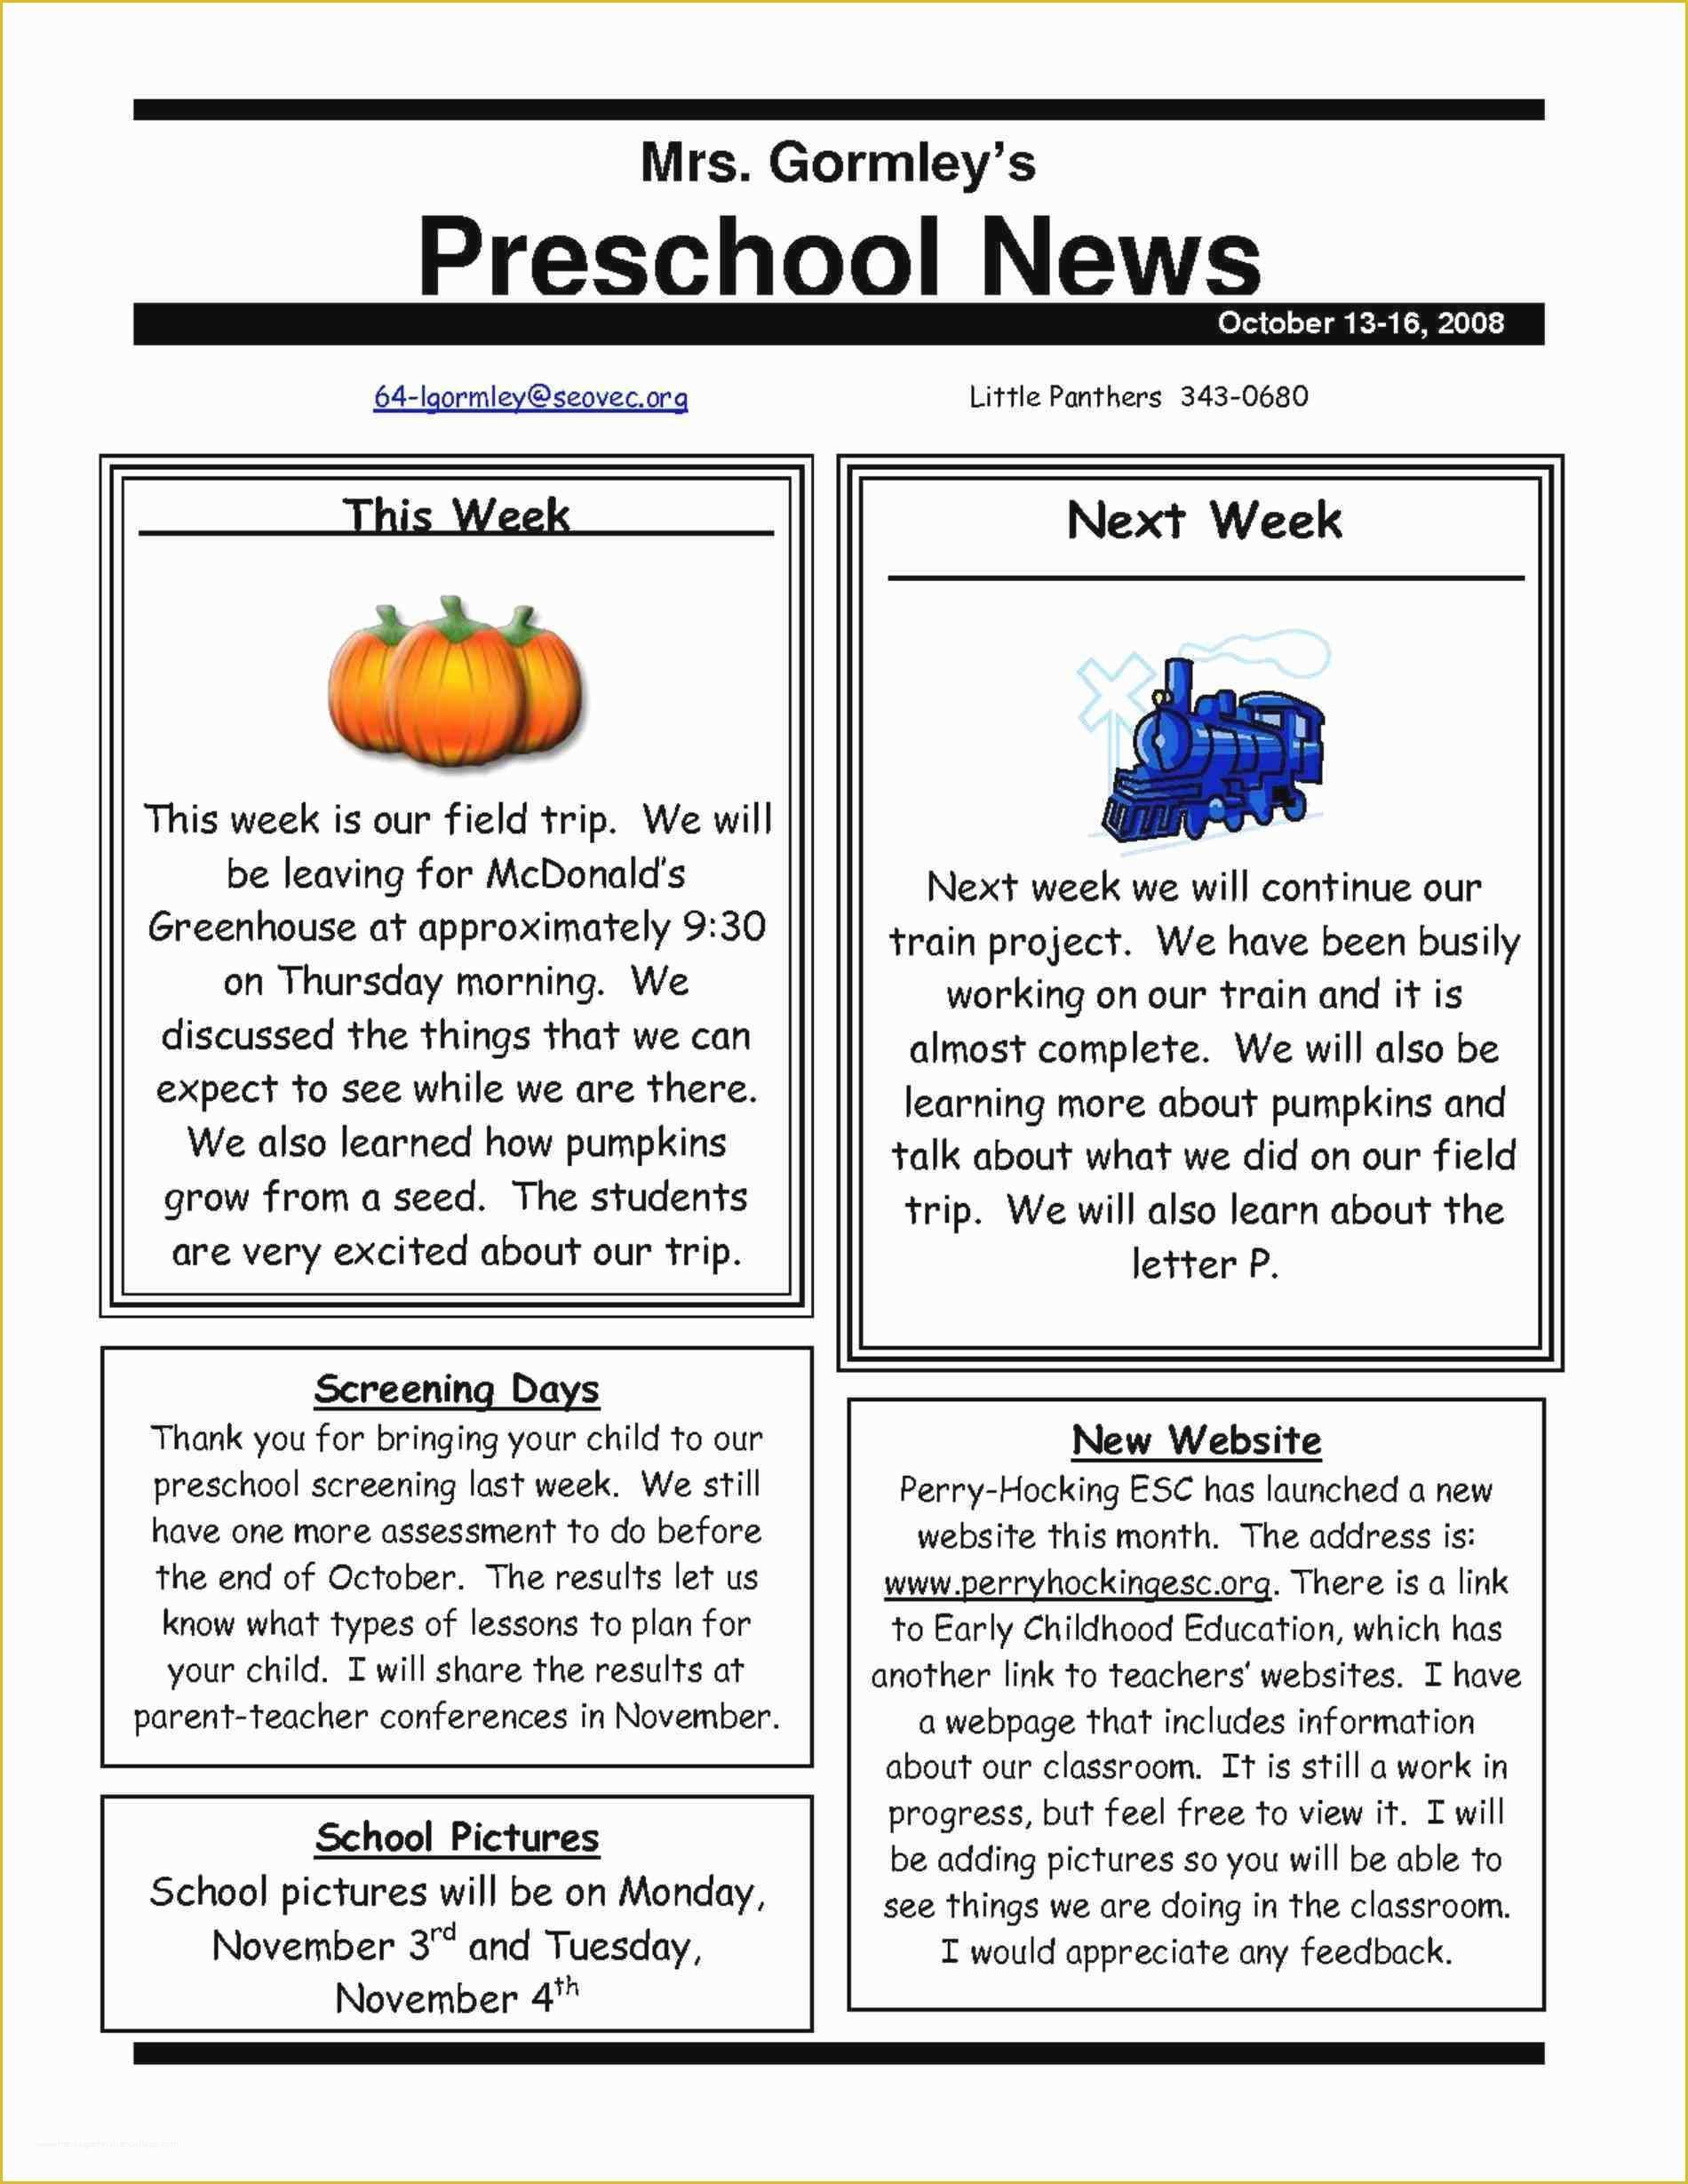 Free Editable Newsletter Templates Of Elegant Free Editable Newsletter Templates for Preschool